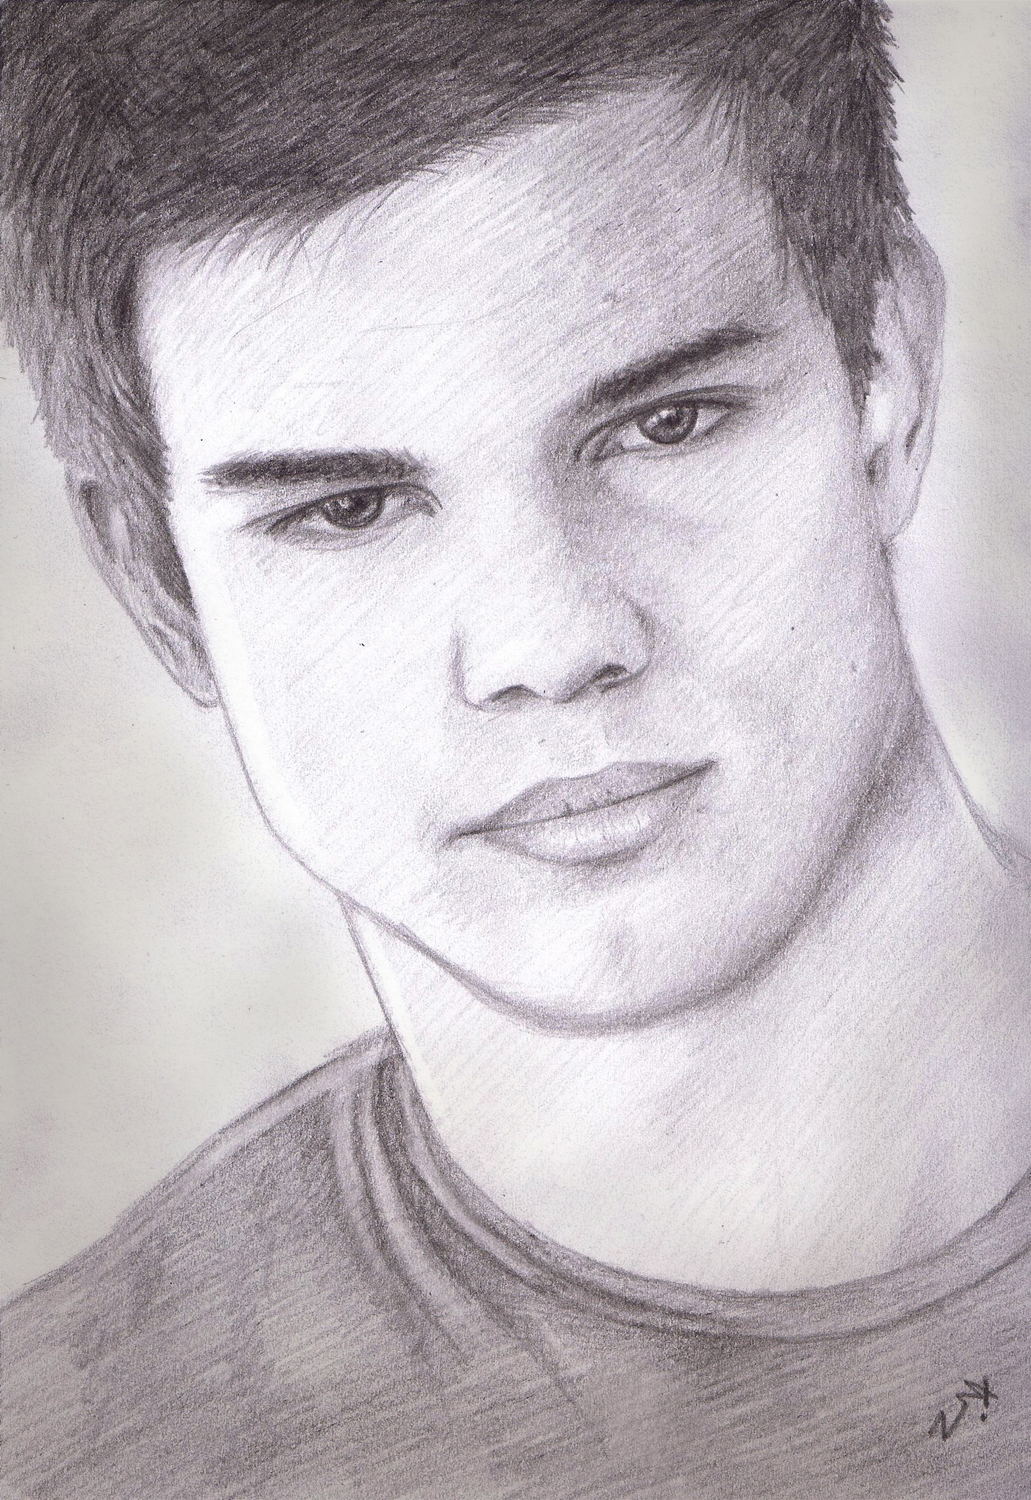 Taylor Lautner Image Drawing